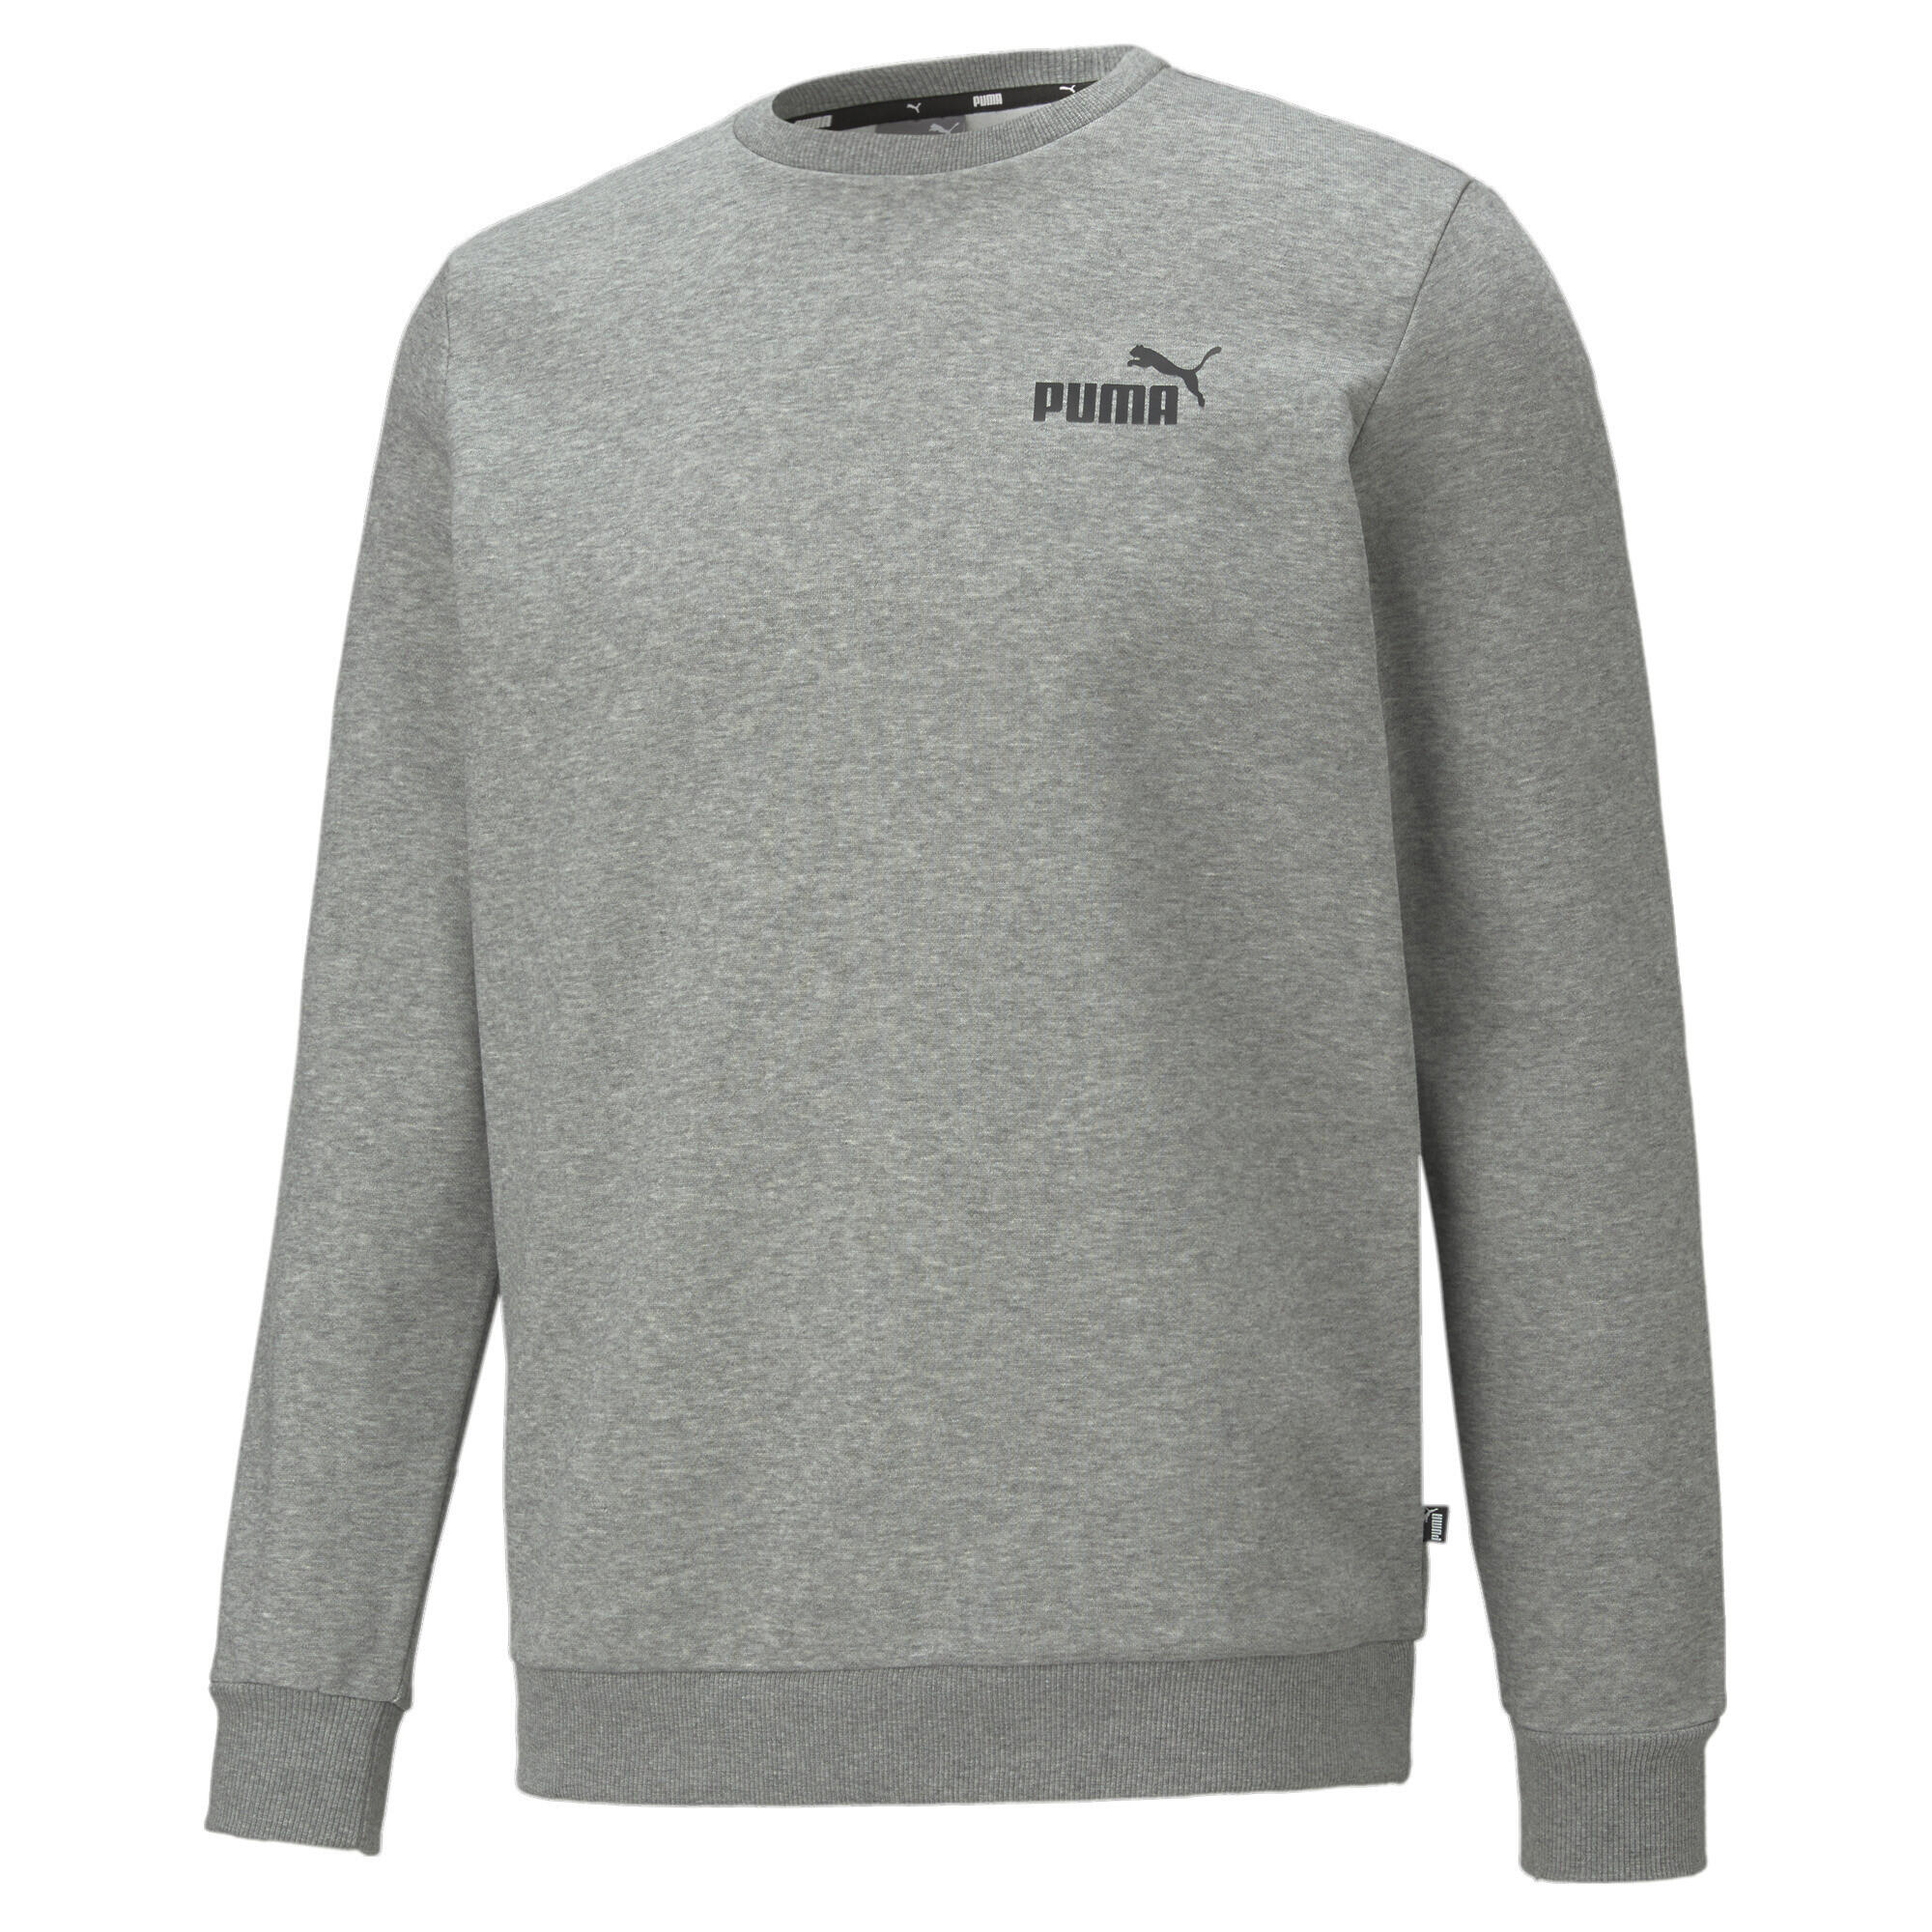 PUMA PUMA Mens Essentials Small Logo Crew Neck Sweatshirt - Medium Gray Heather